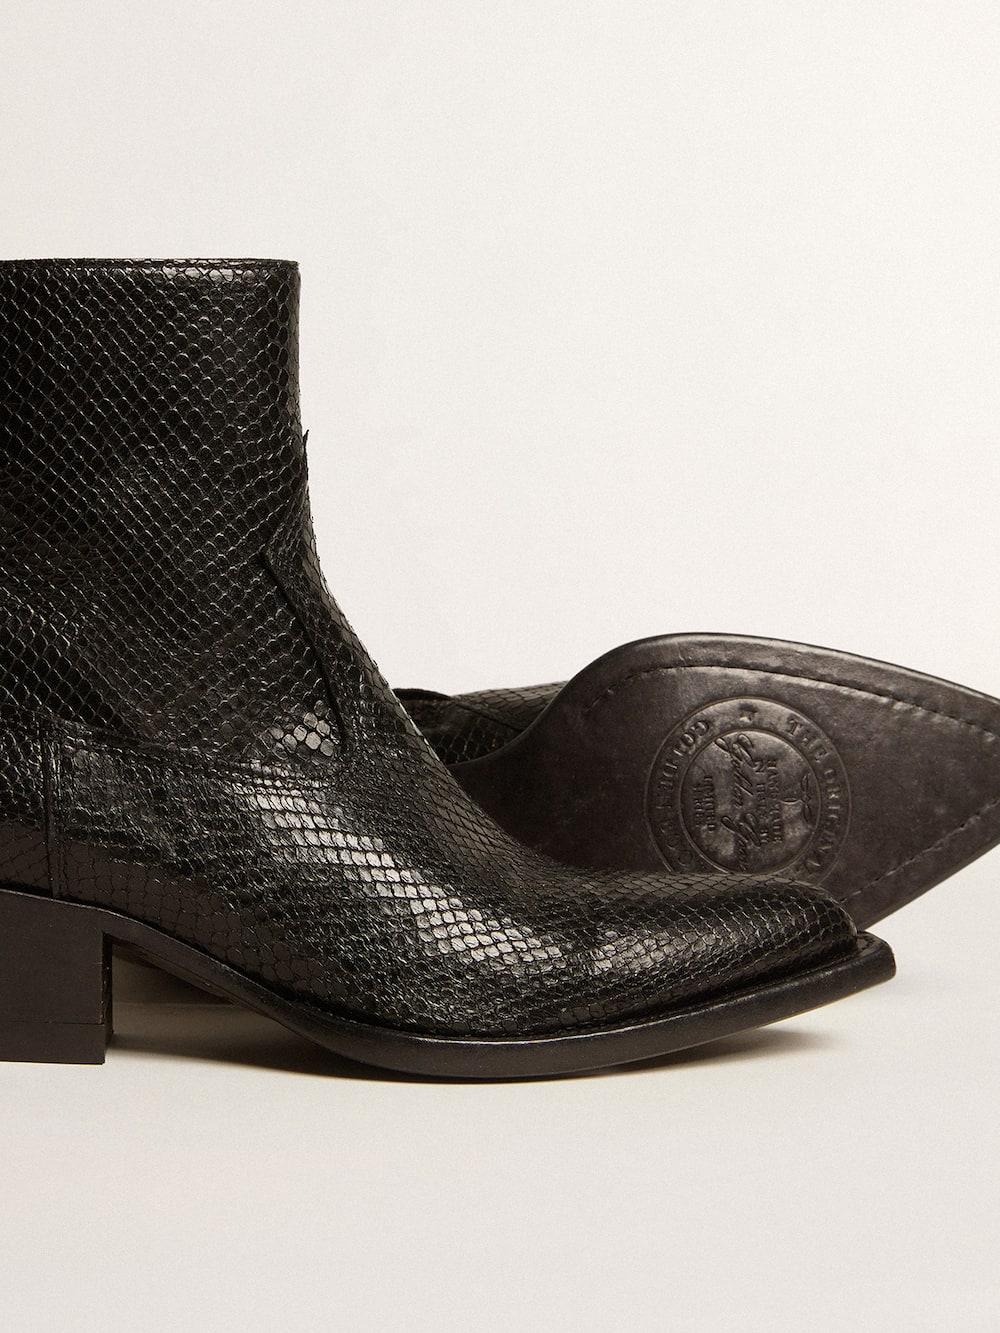 Golden Goose - Low Debbie boots in black snake-print leather in 